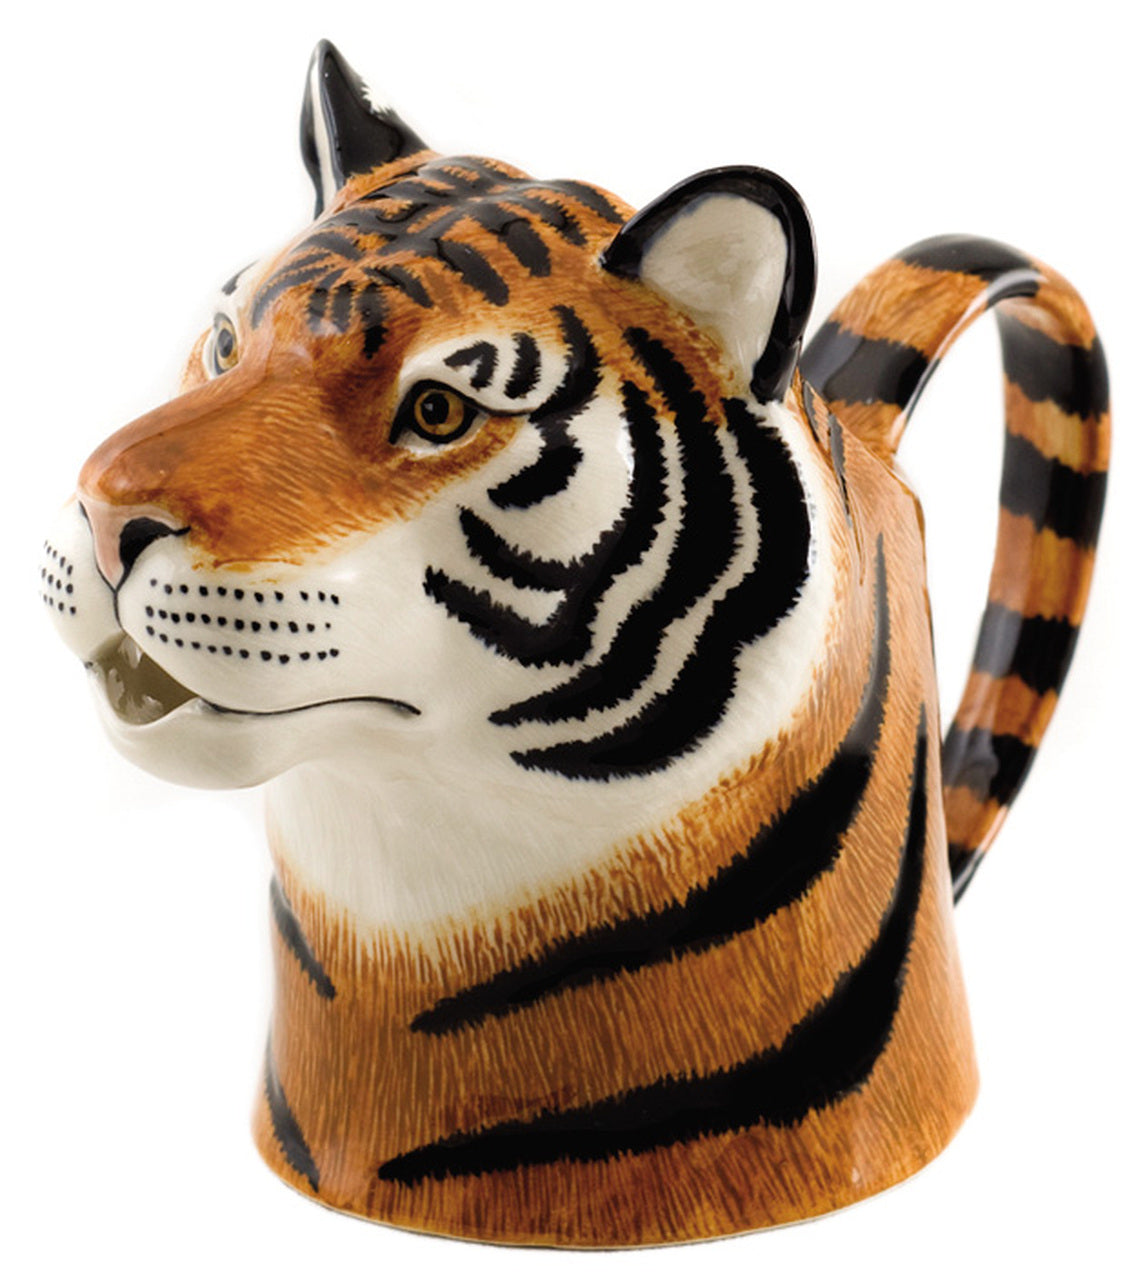 A quirky British brand called Quail presents a Tiger Ceramic mug with a ceramic tiger head.